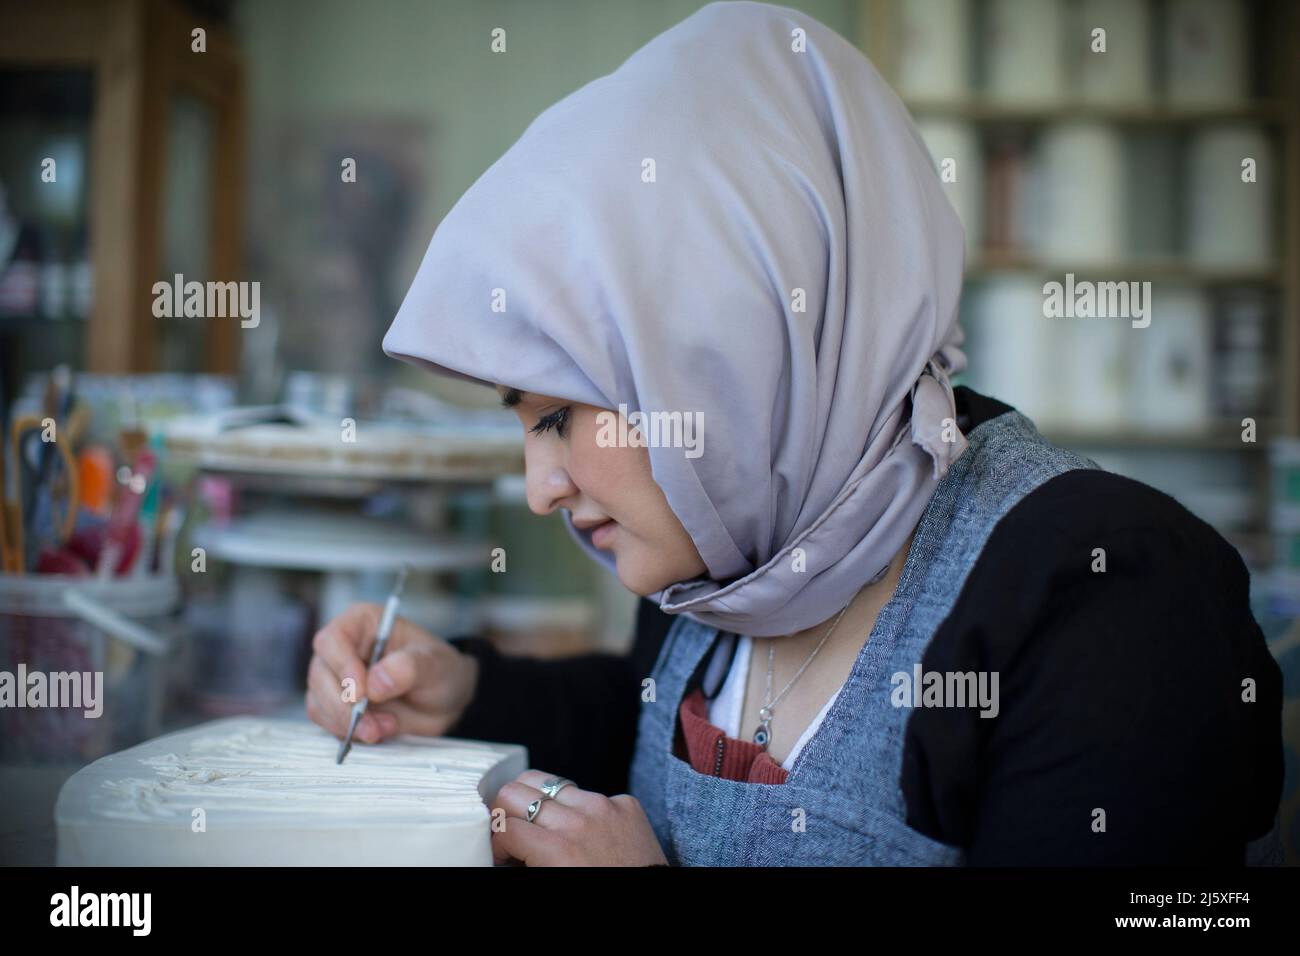 Young female Muslim artist working in art studio Stock Photo